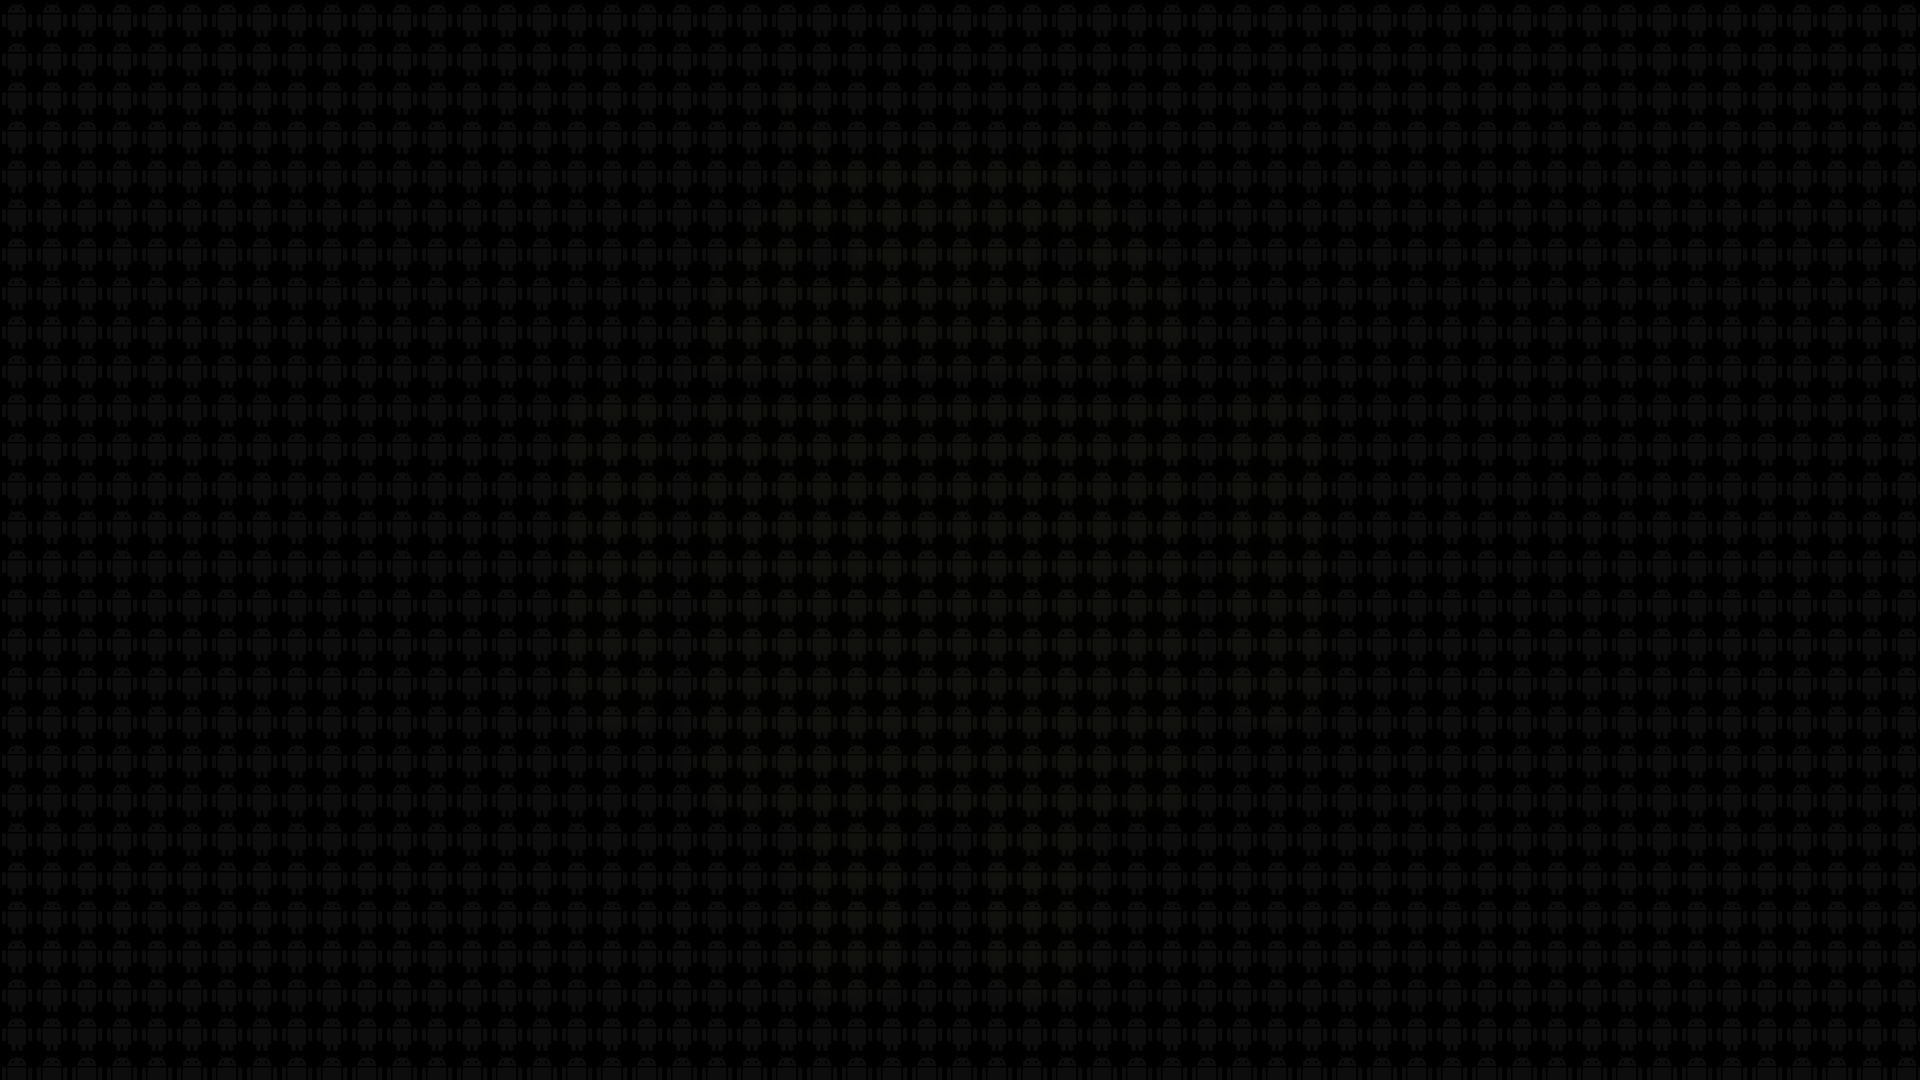 black windows grid